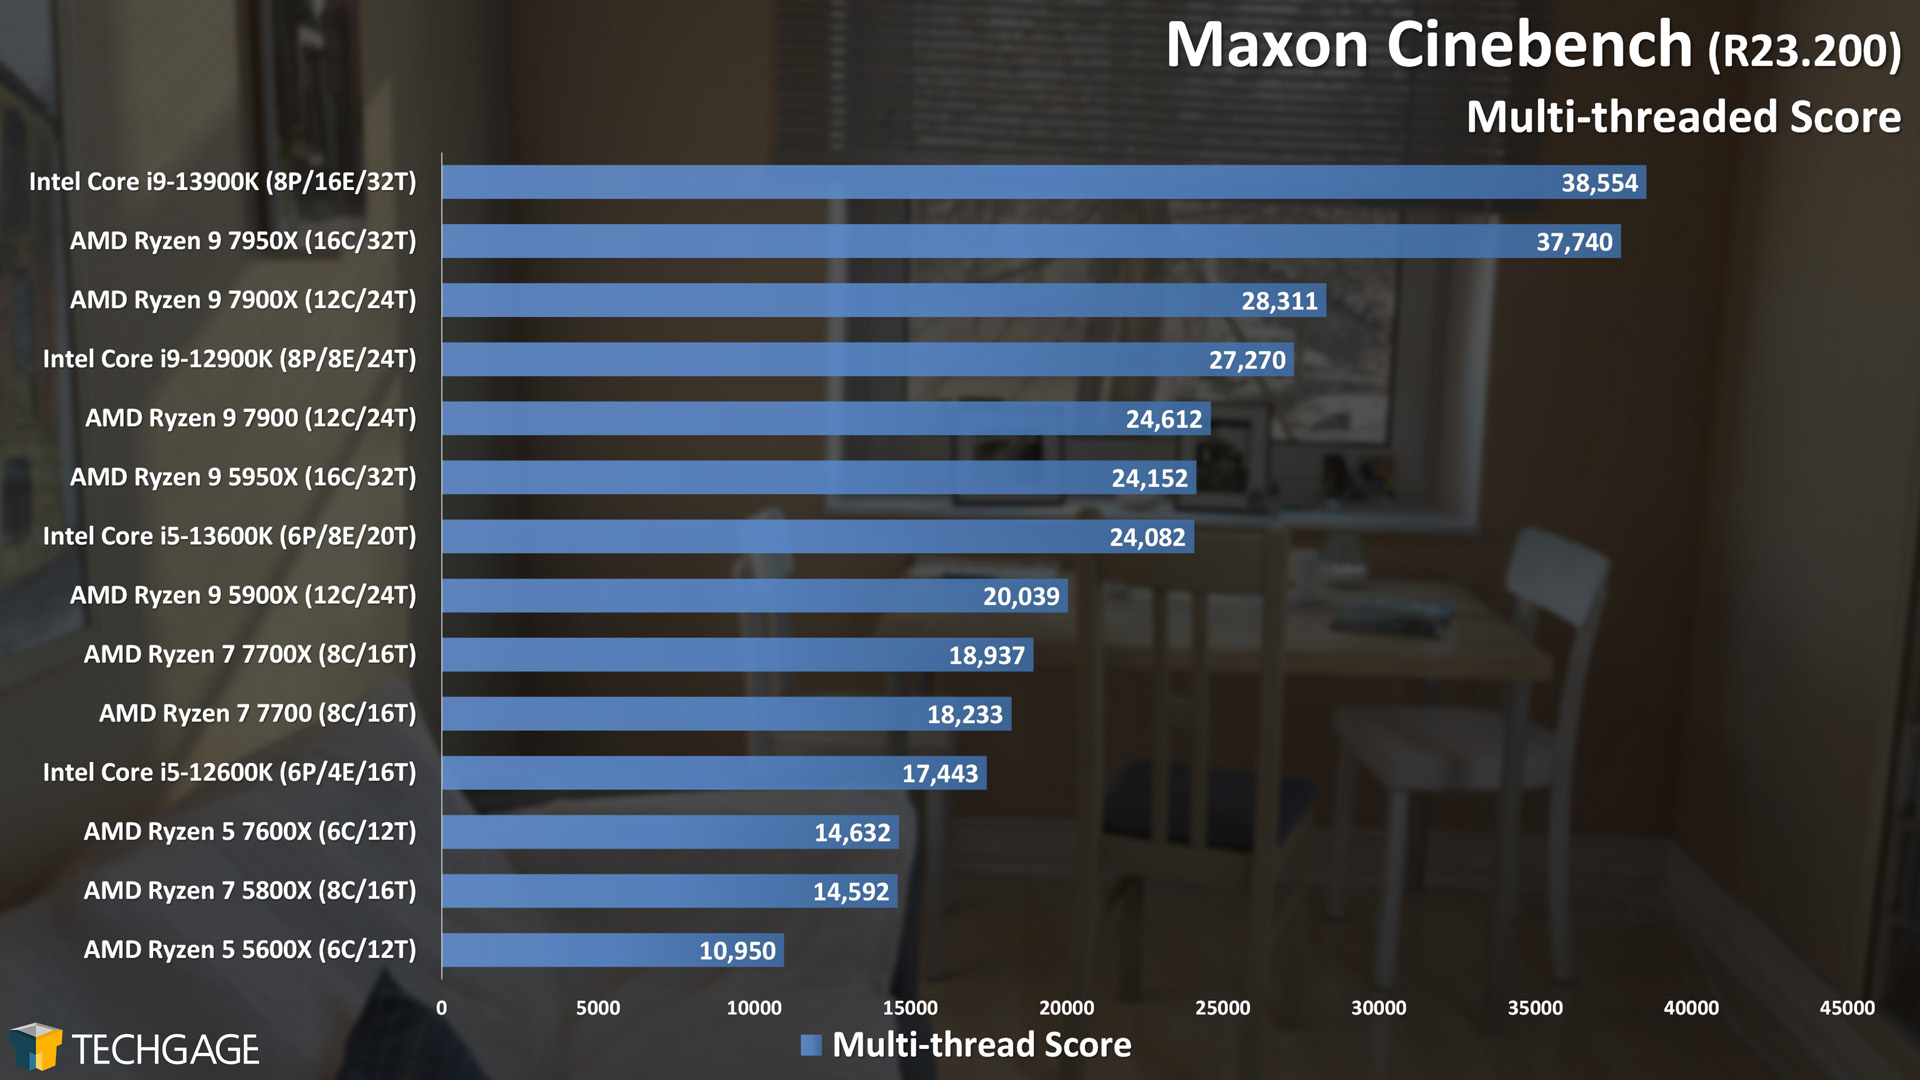 Maxon Cinebench - Multi-threaded Score